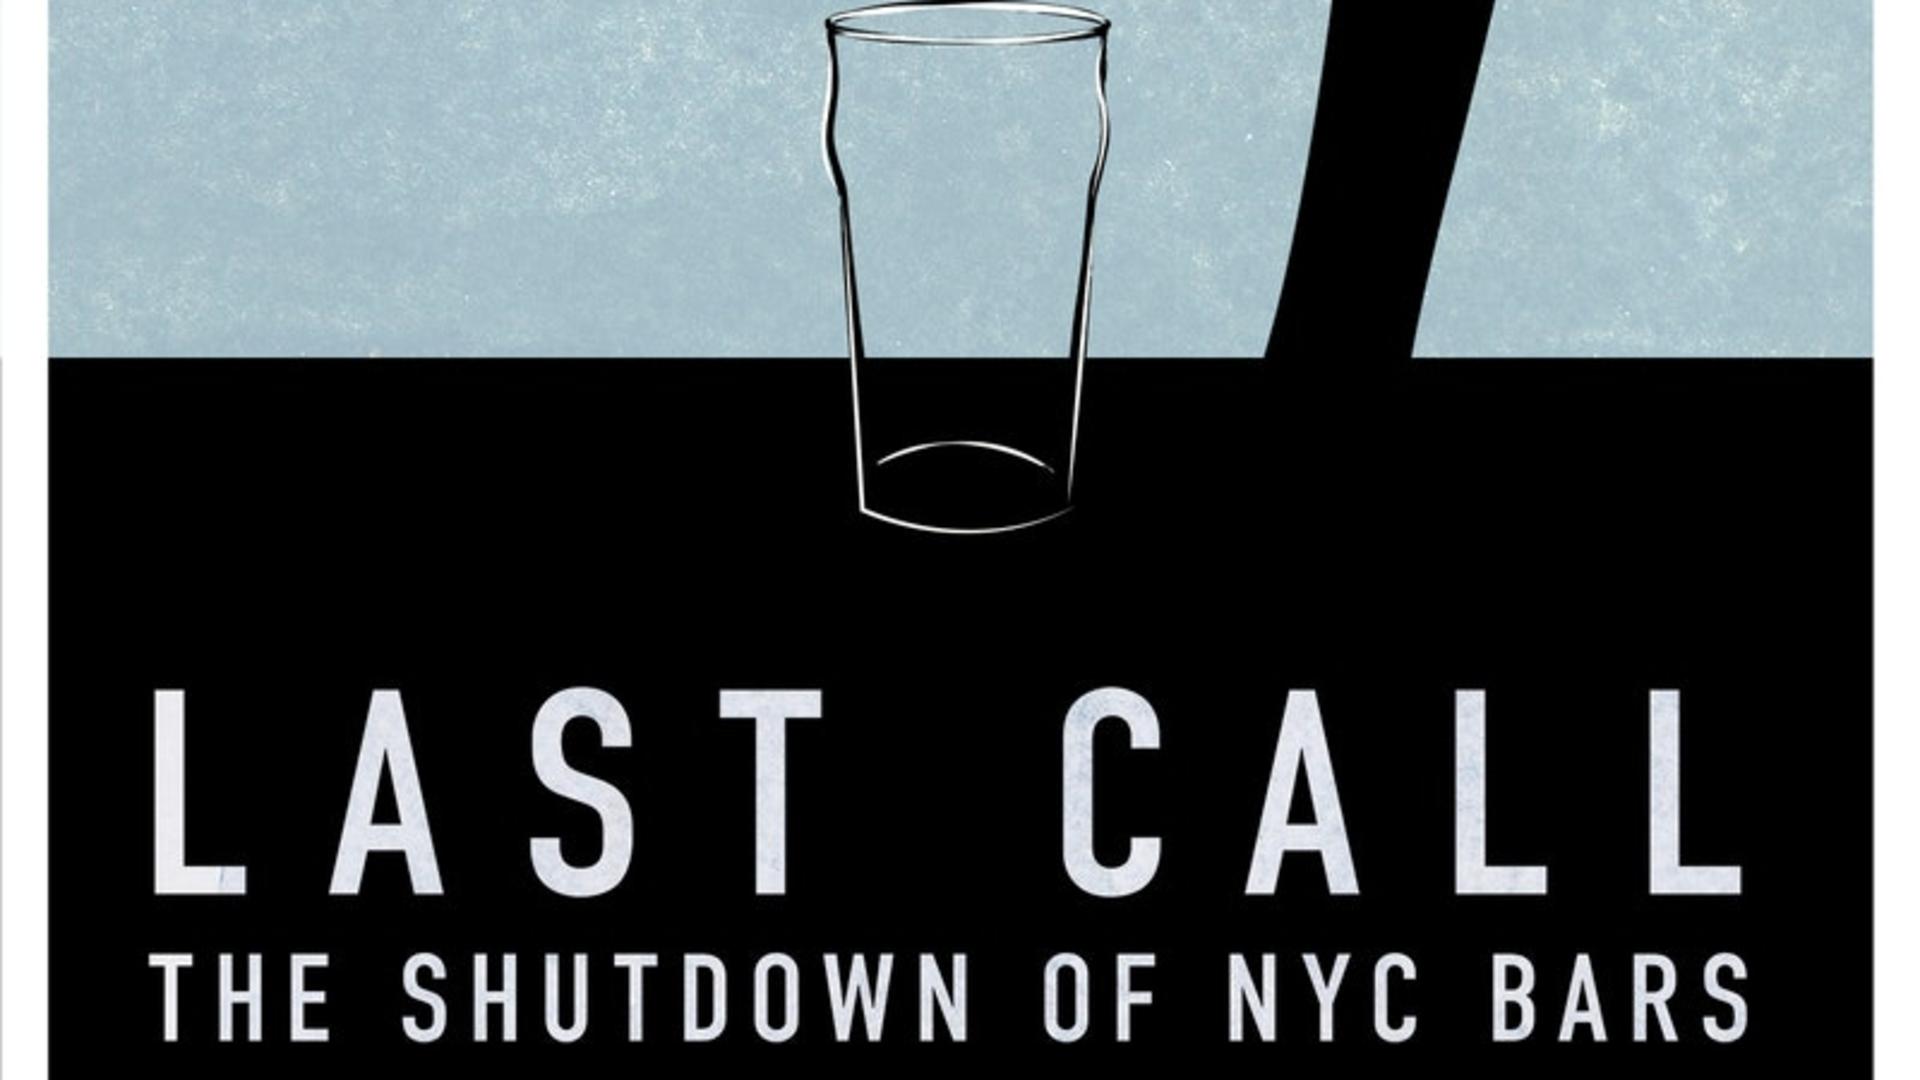 Last Call: The Shutdown of NYC Bars